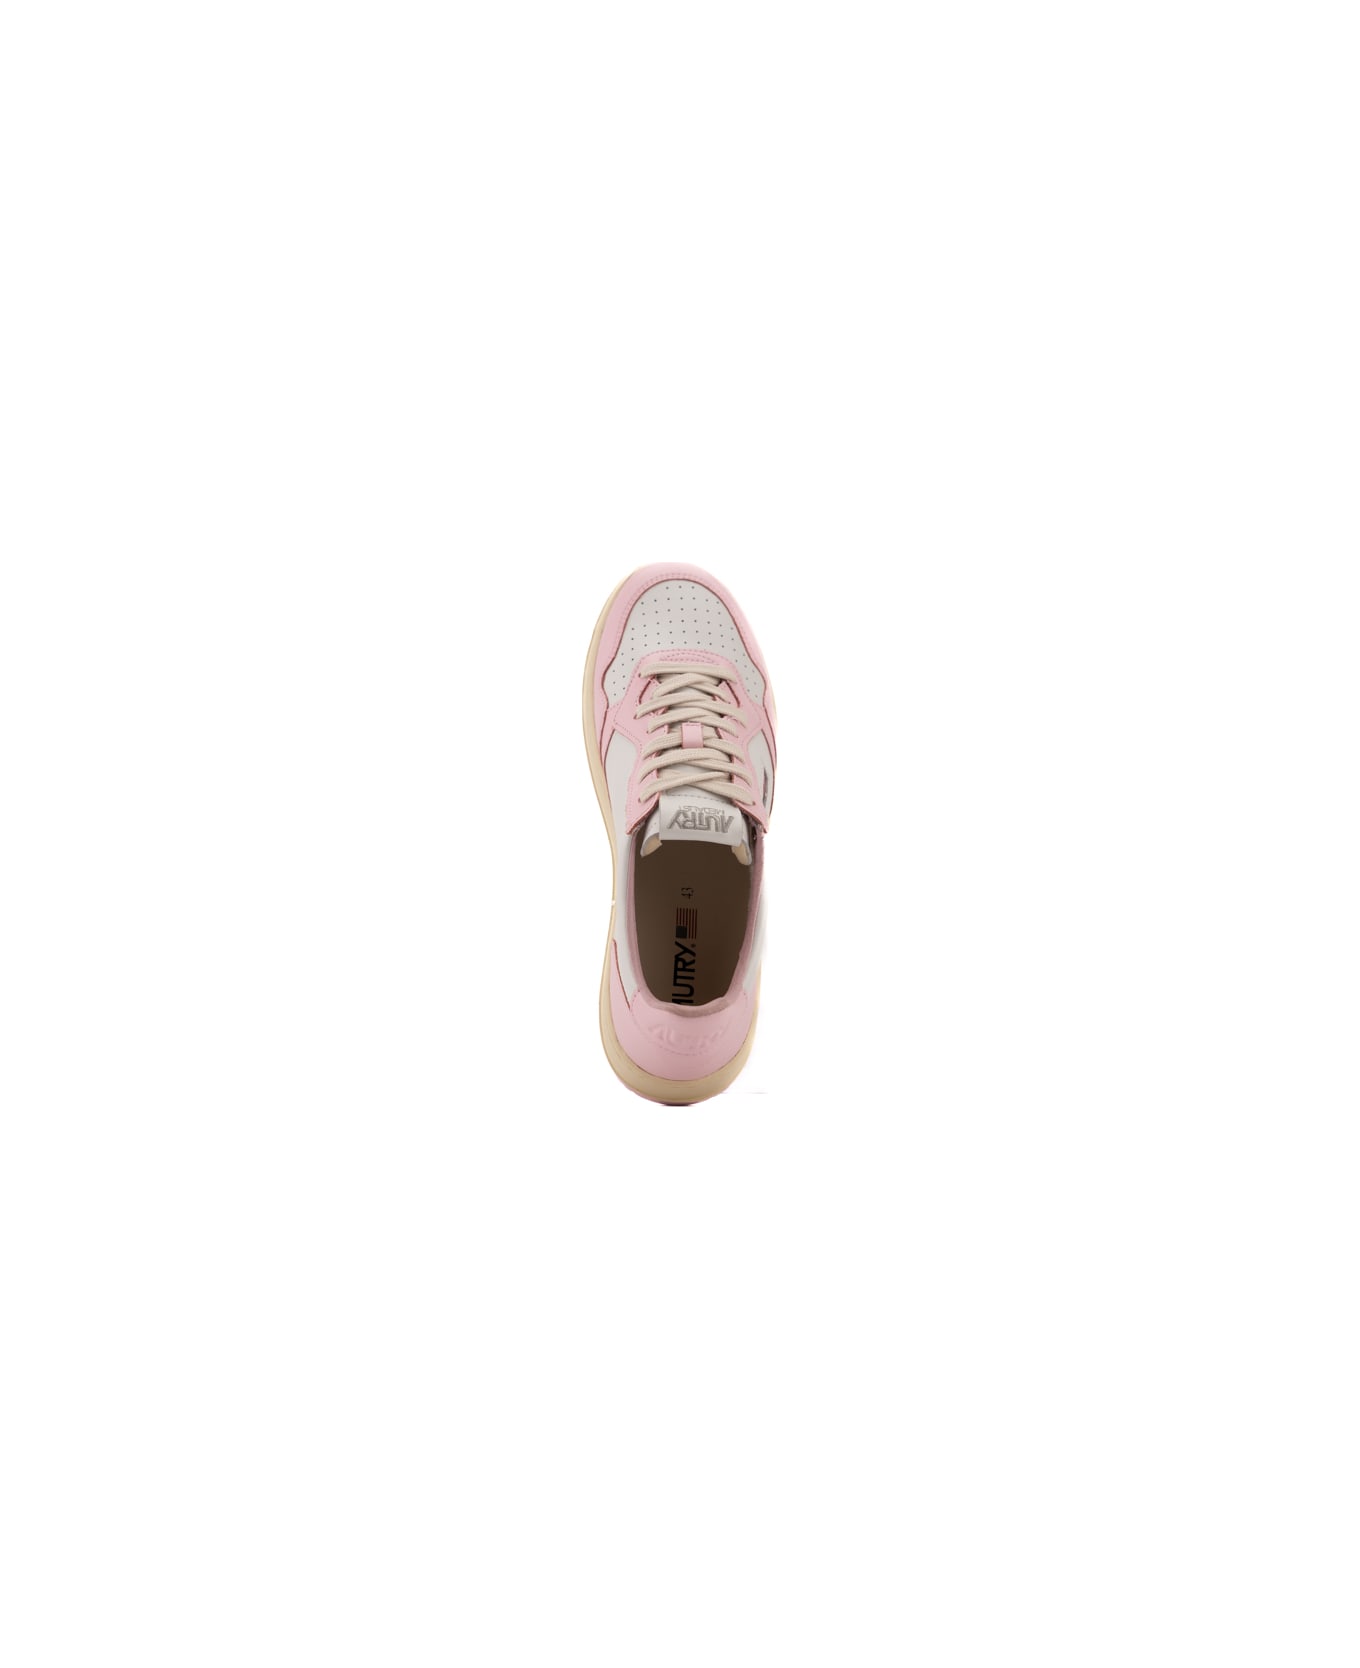 Autry Medialist Low Sneakers - Wht/pink